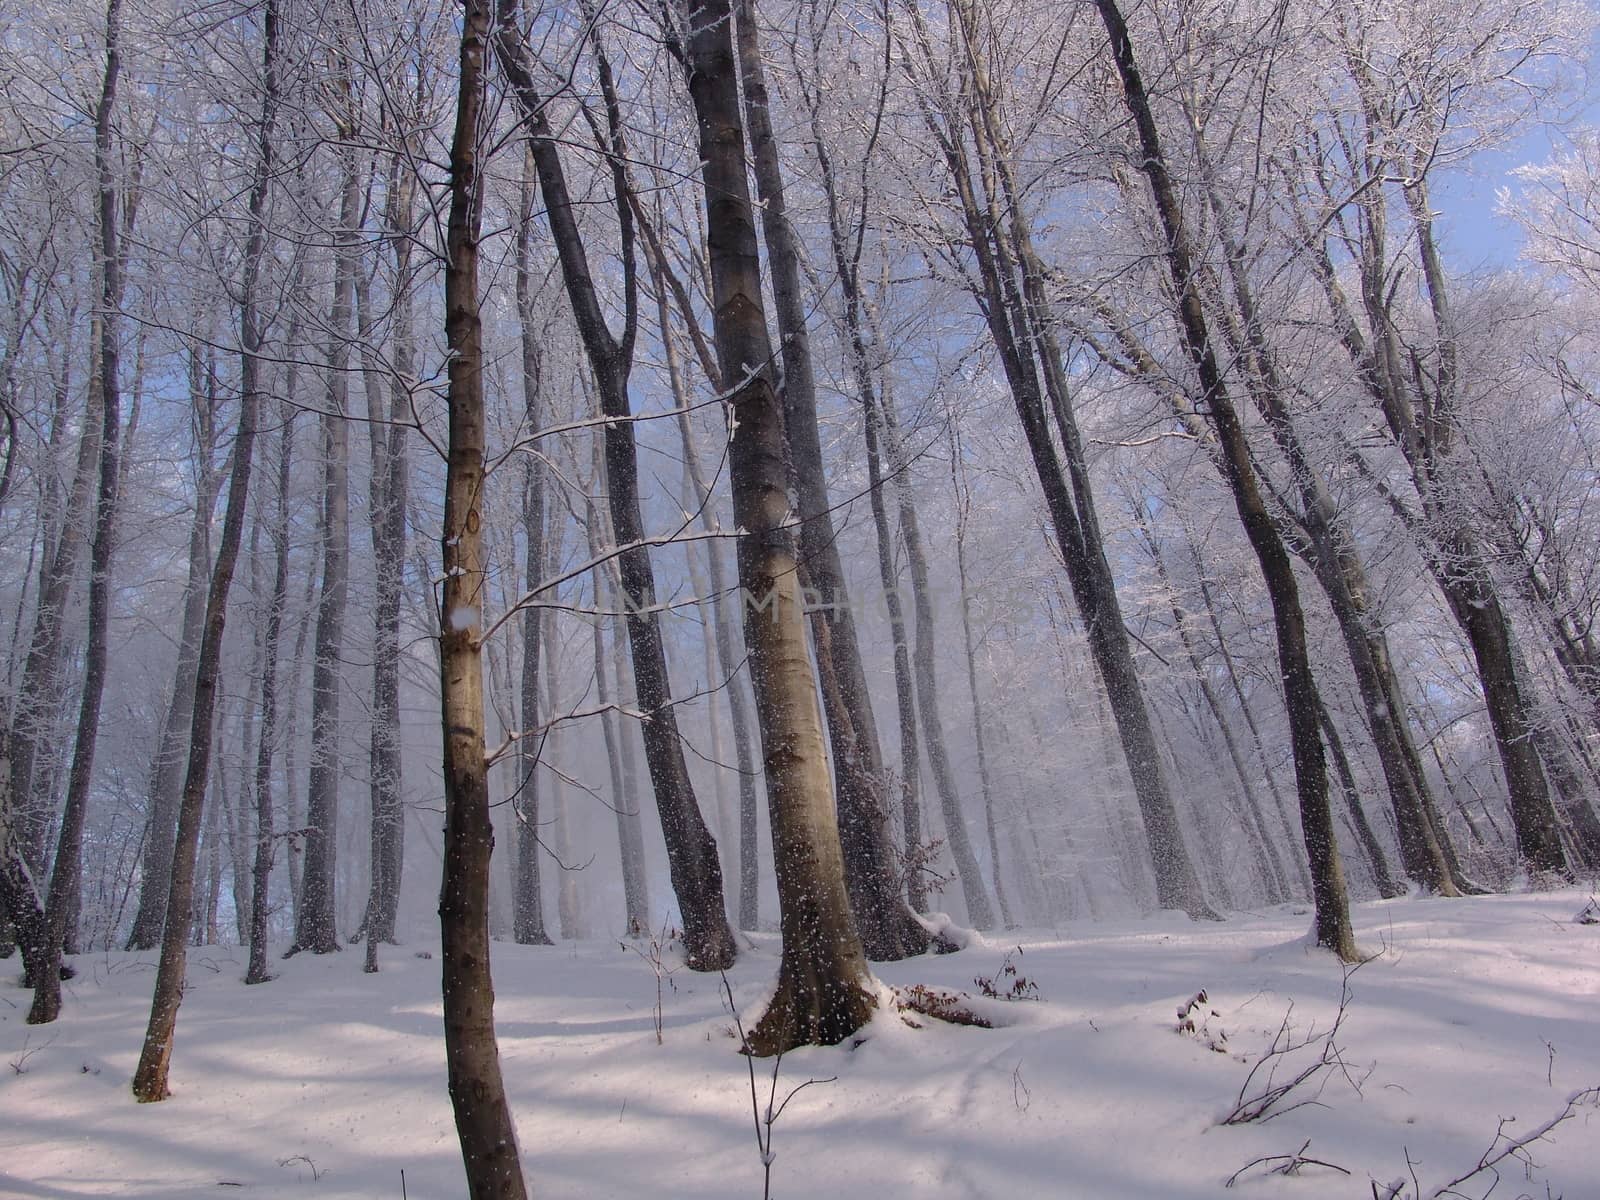 The winter forest scene. Snowy landscape.